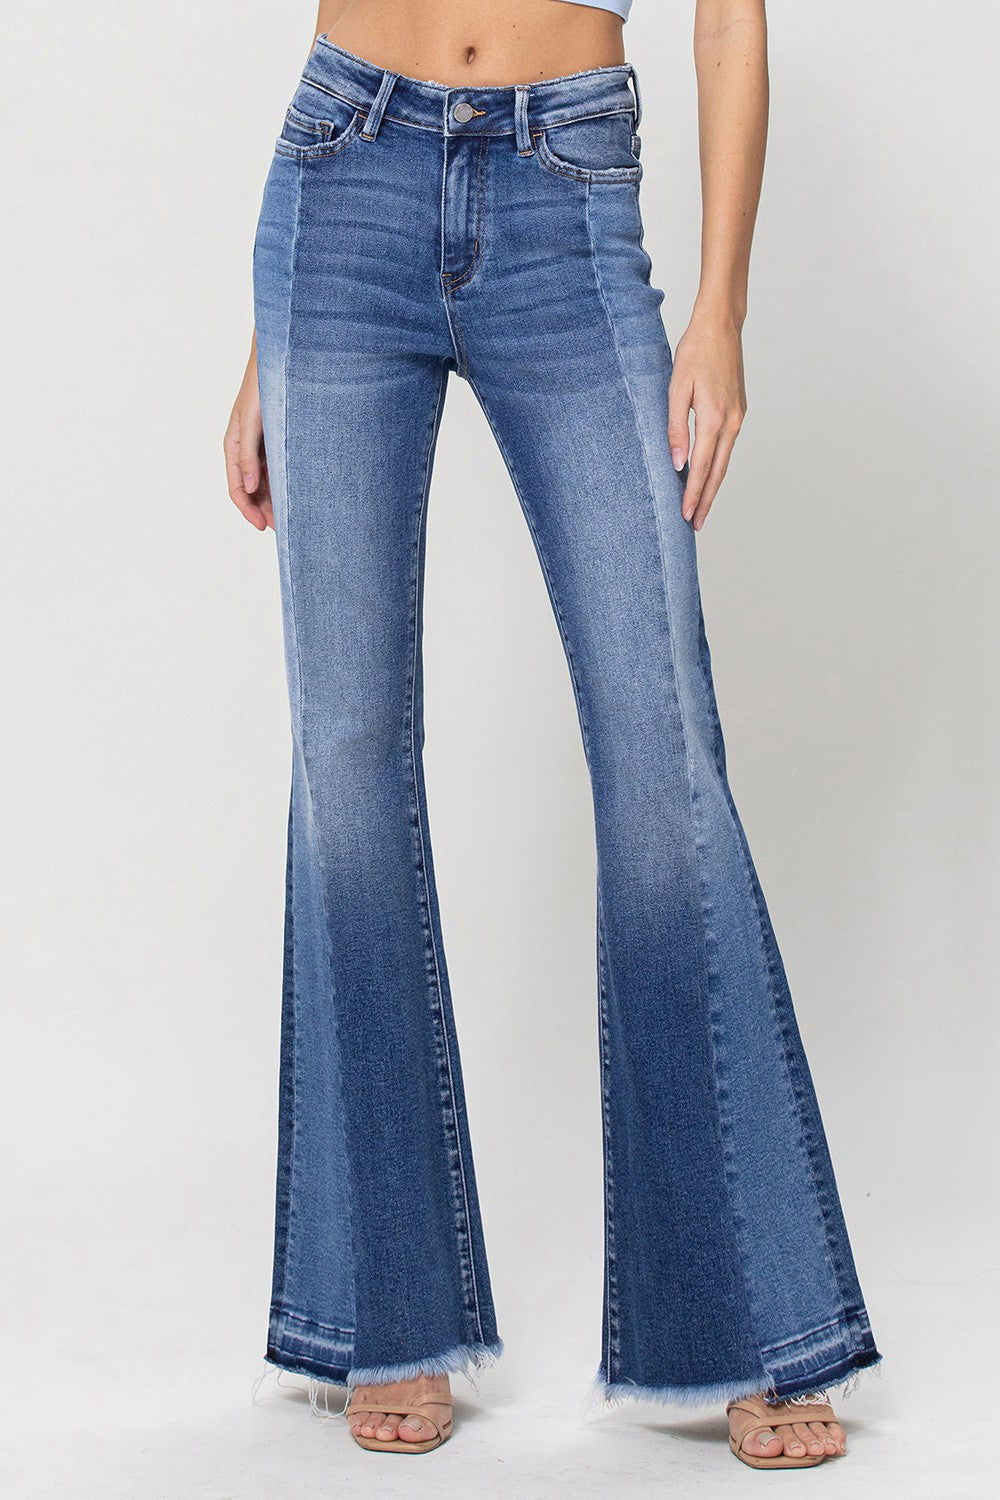 Vervet Bella High Rise Contrast Panel Jeans